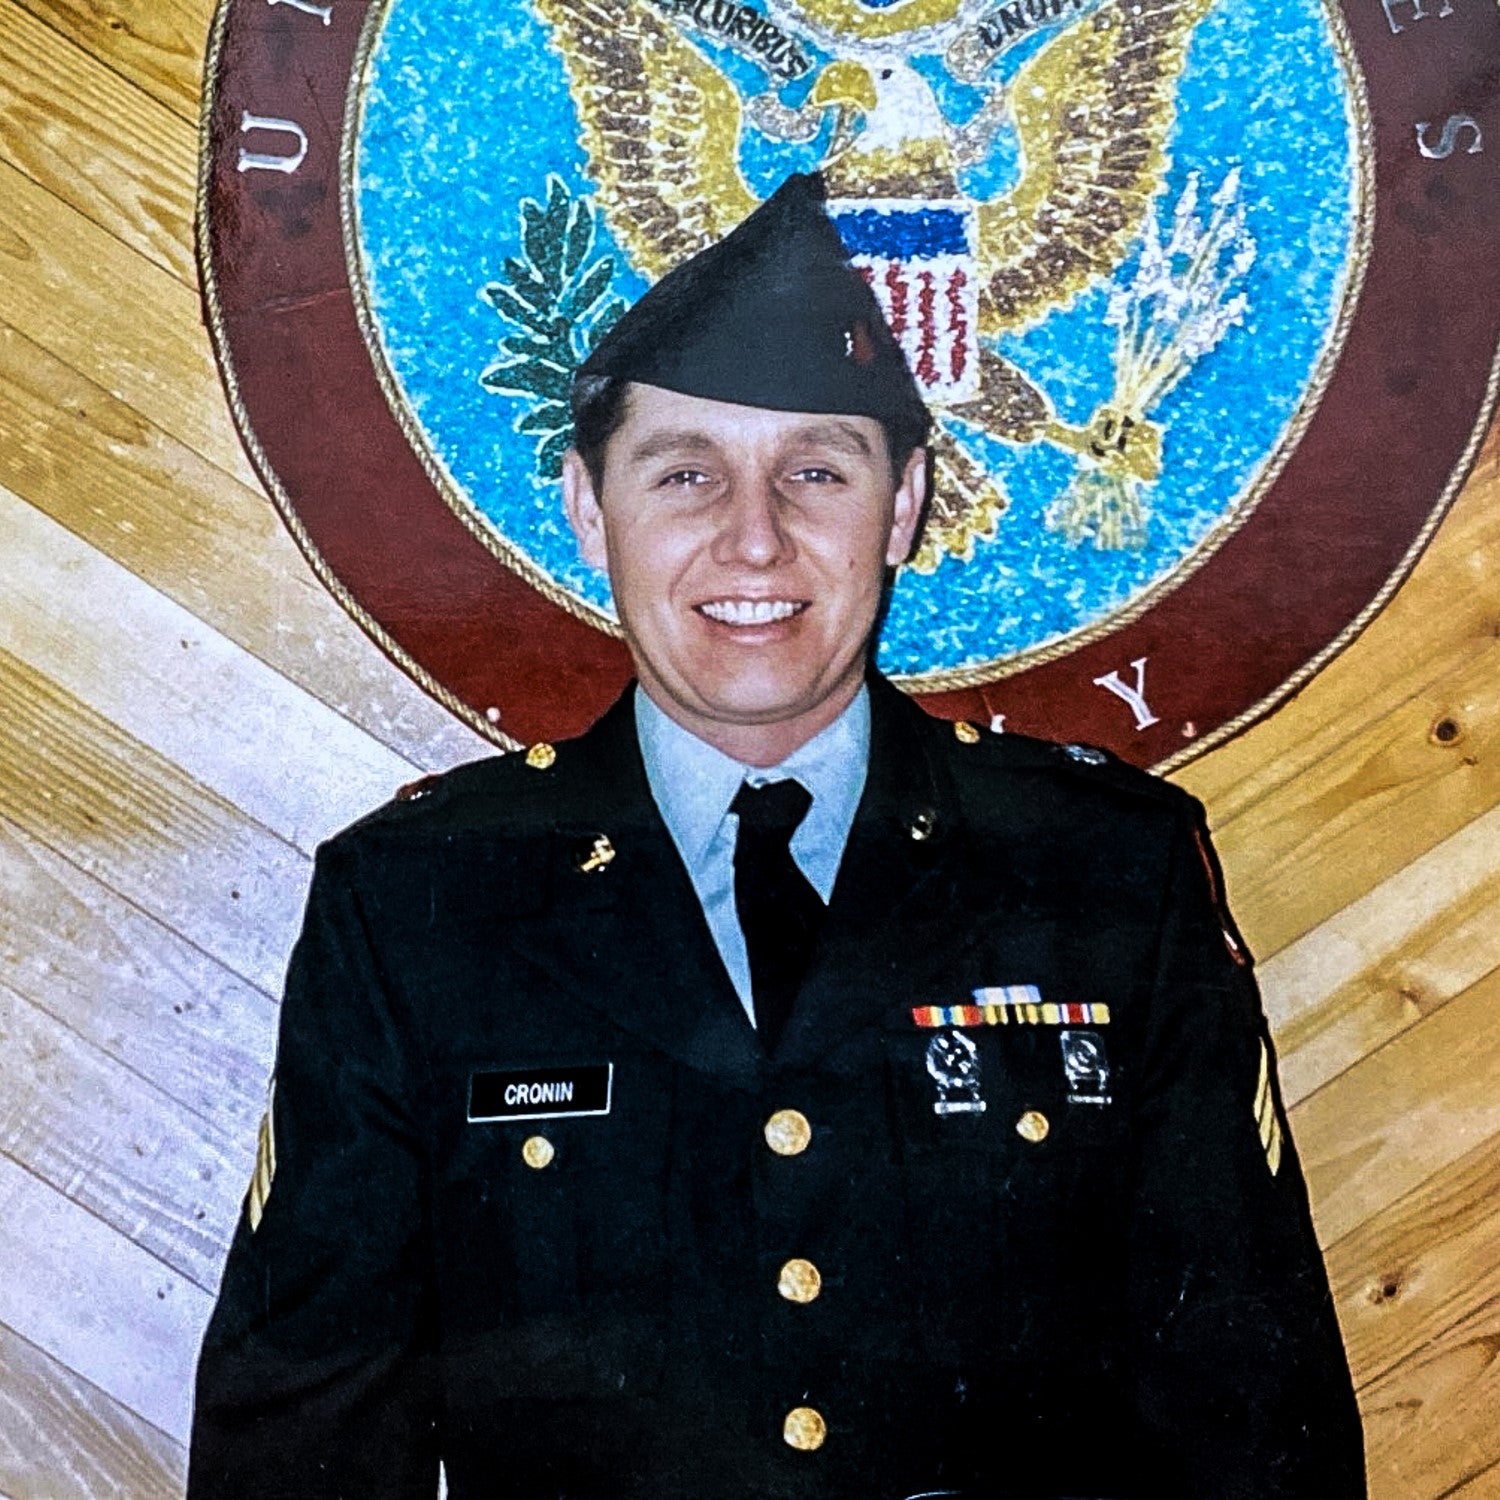 Man wearing a uniform